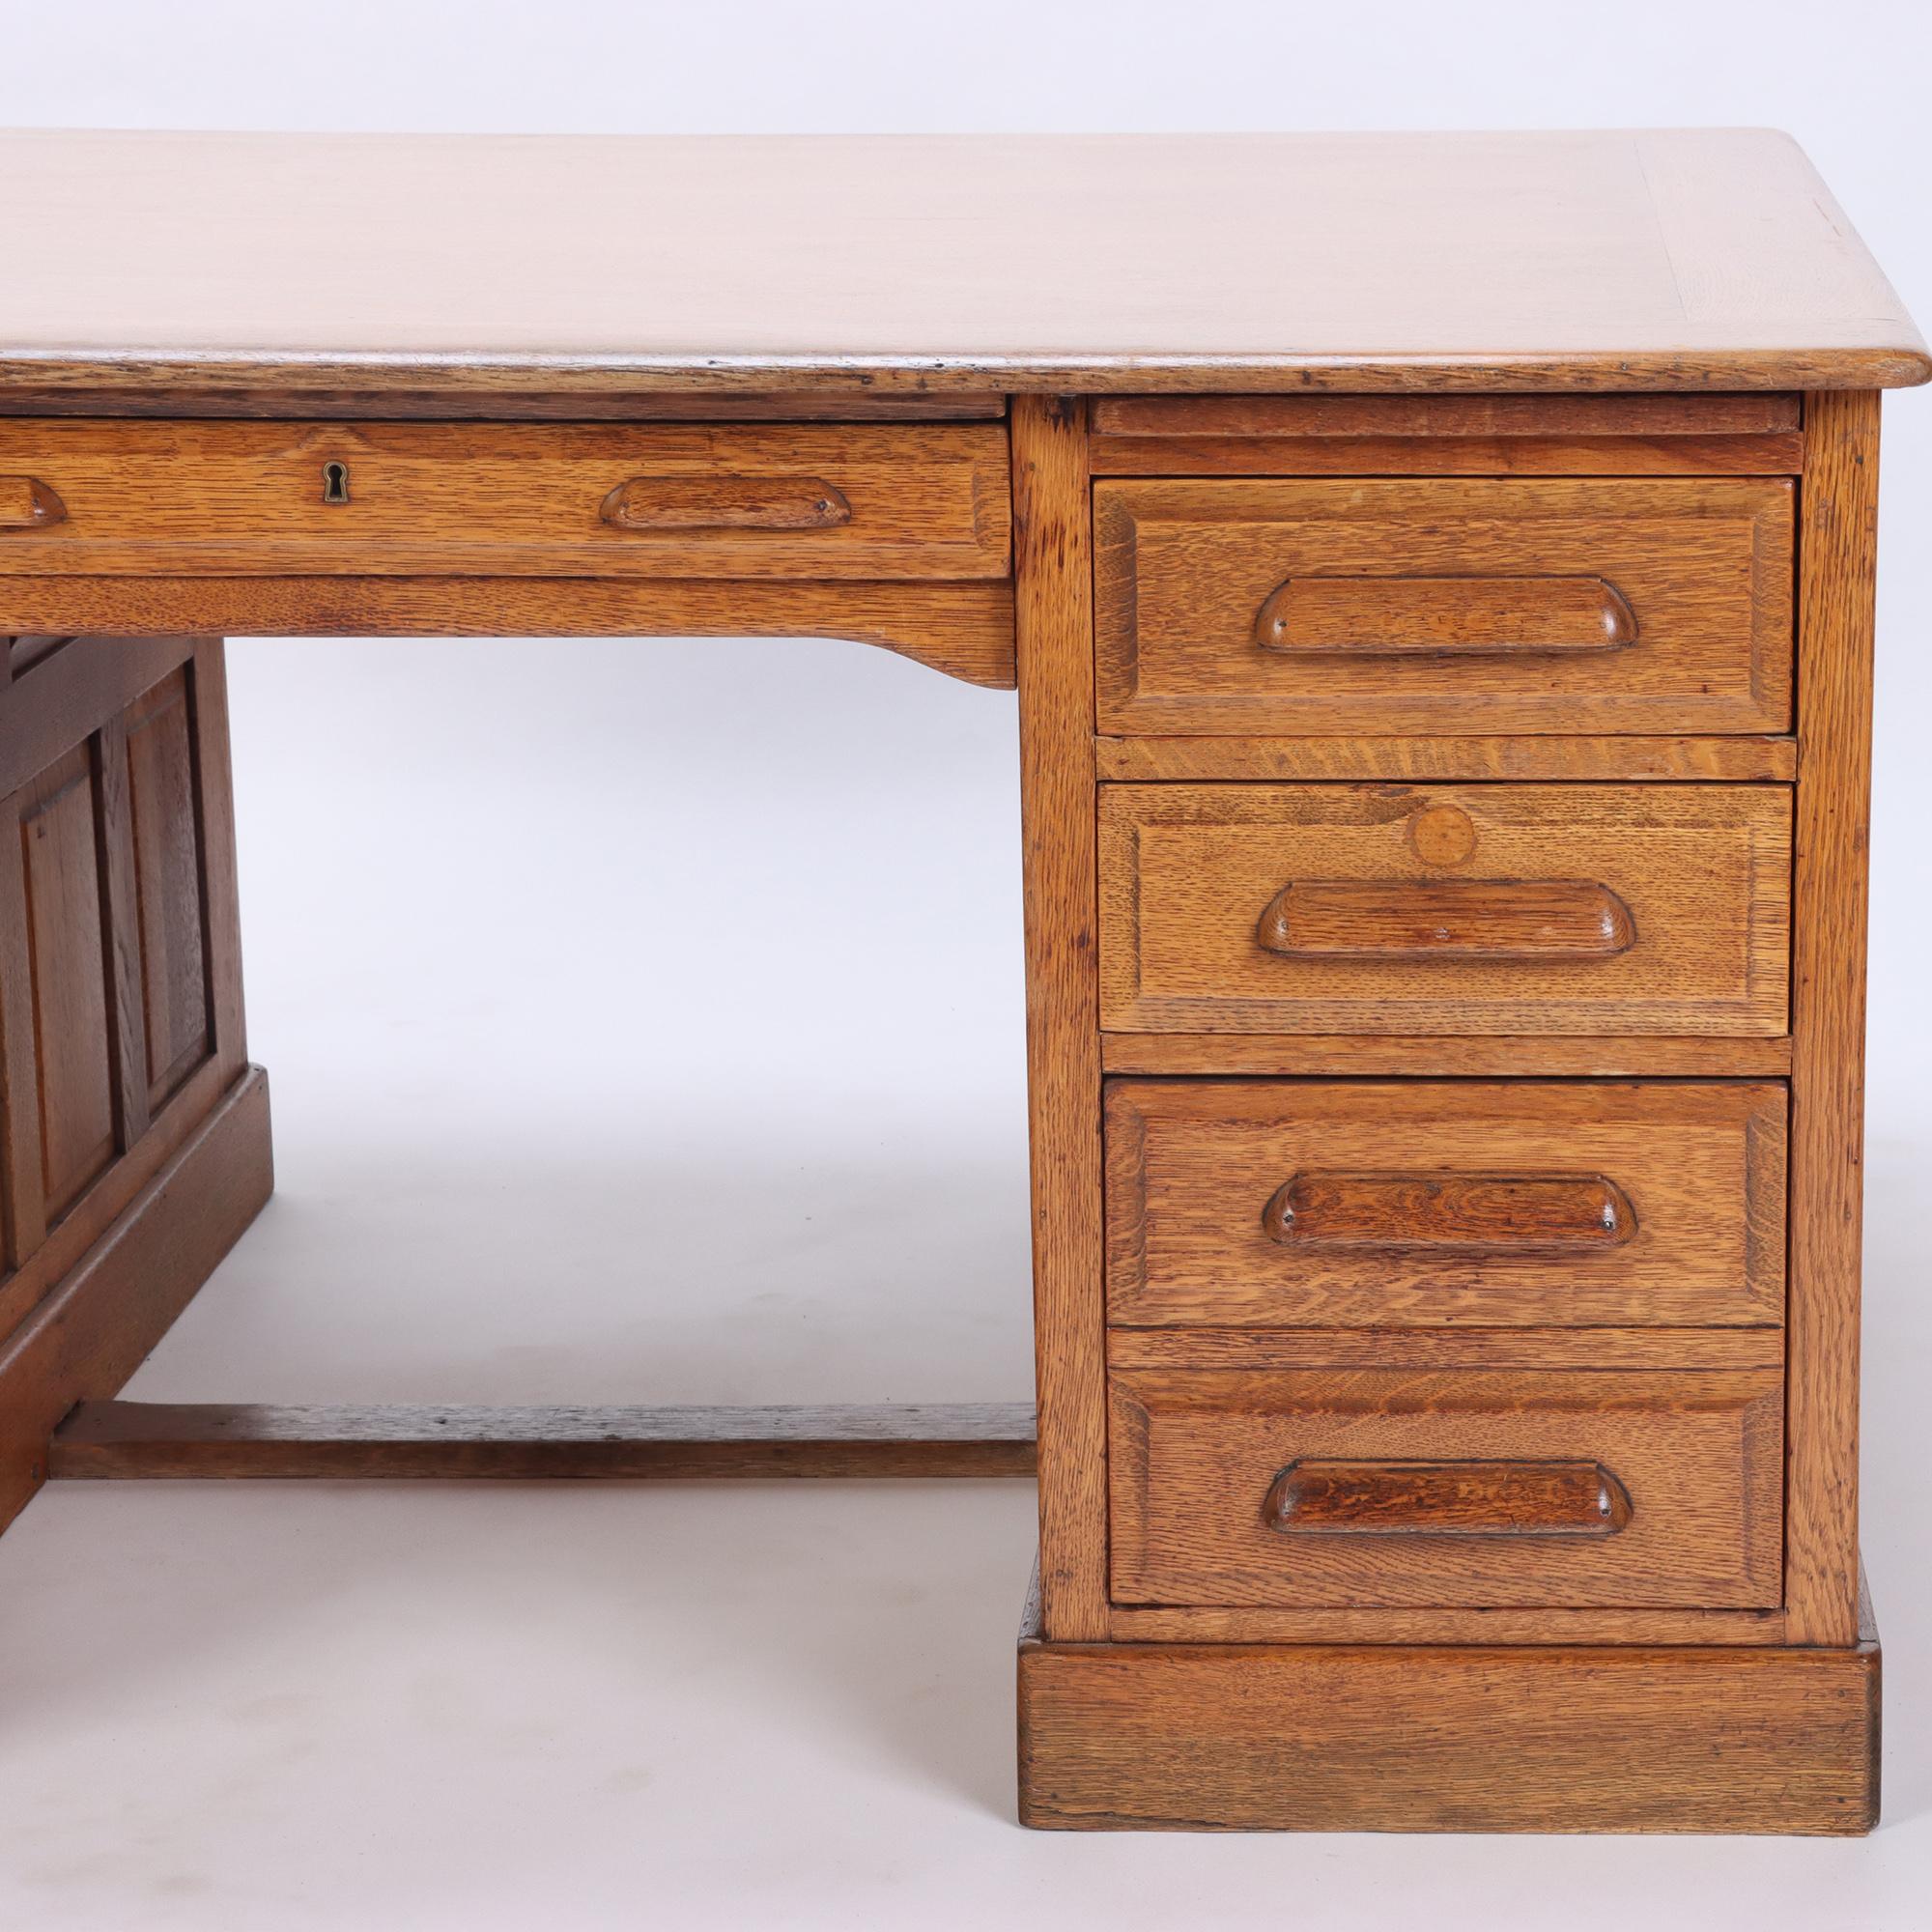 Early 20th Century American Oak Raised Panel Partners Desk, circa 1900